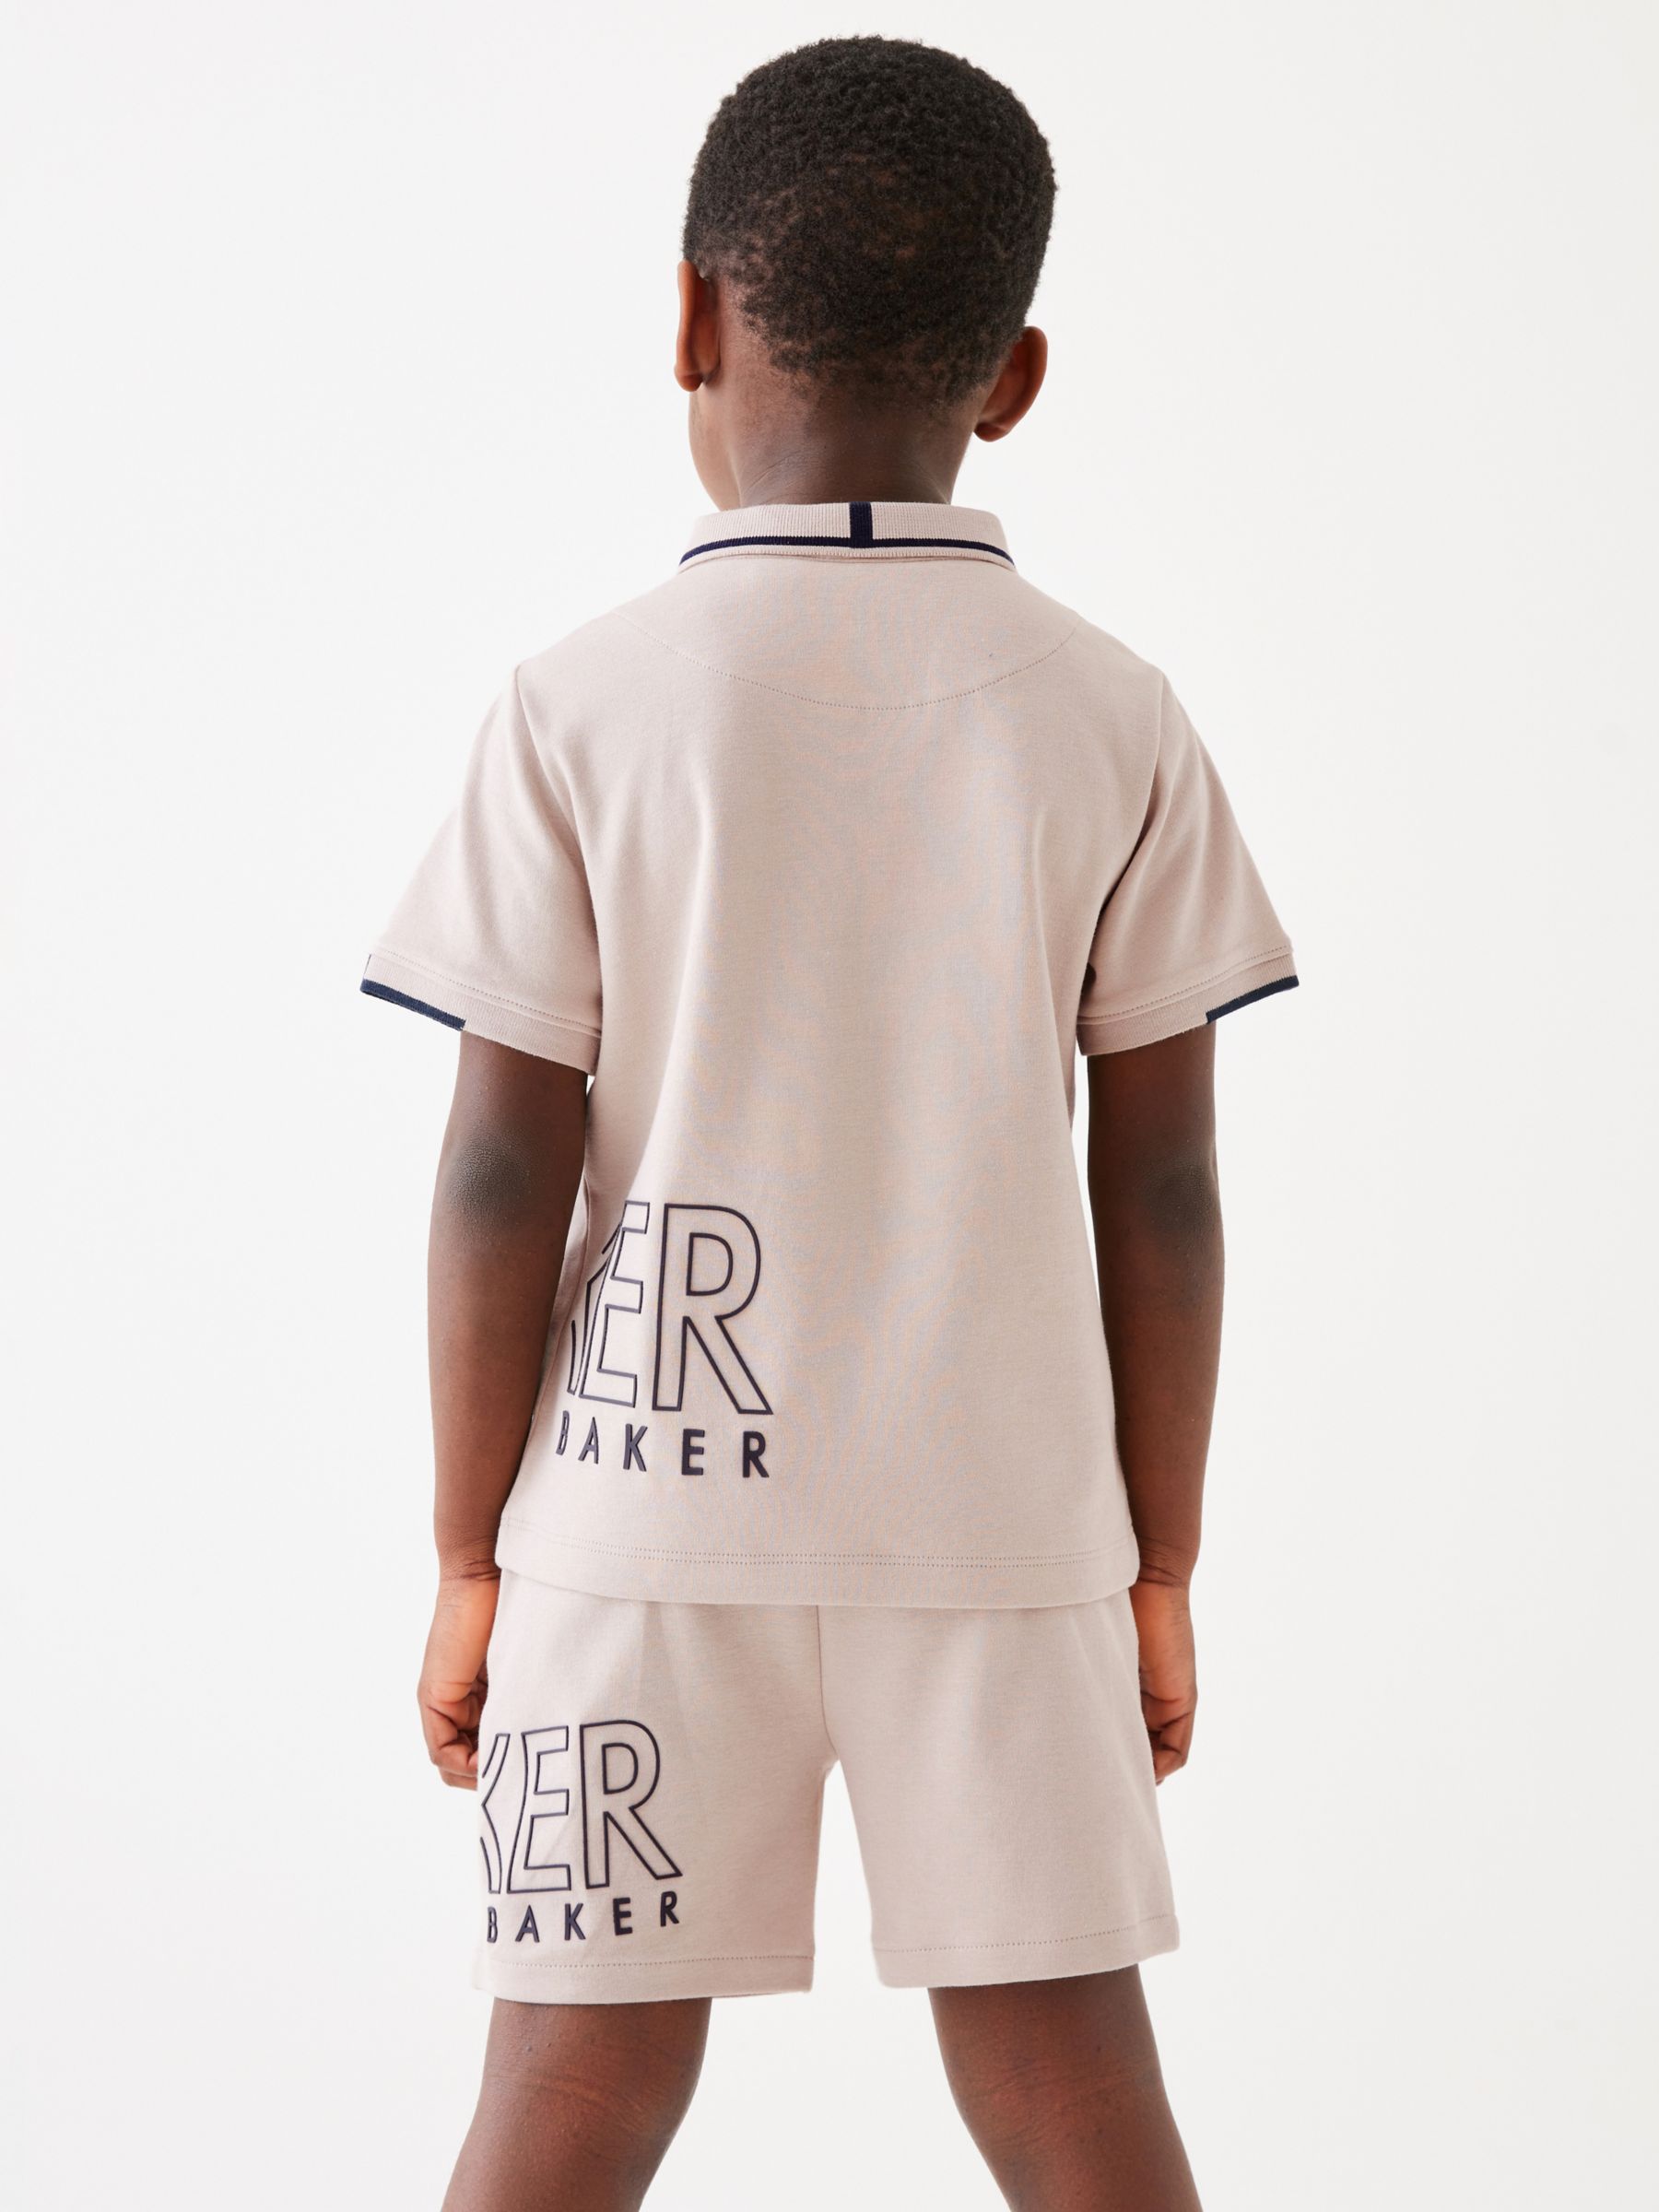 Ted Baker Kids' Logo Polo Shirt & Shorts Set, Stone, 2-3 years